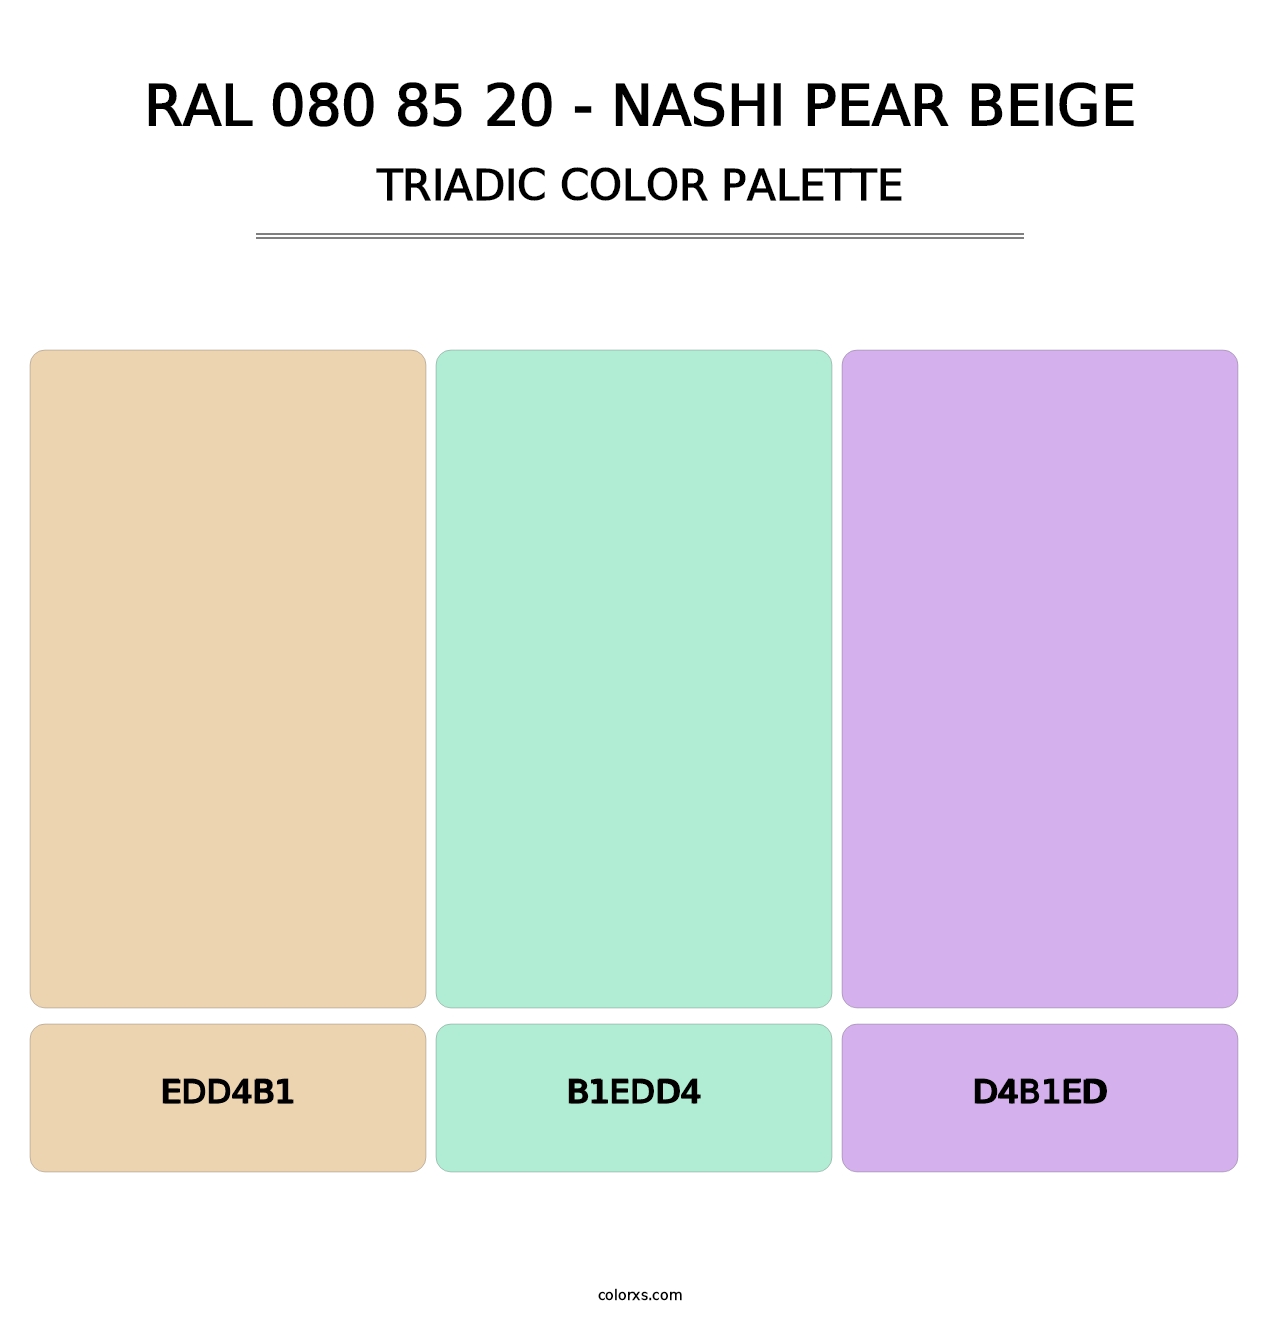 RAL 080 85 20 - Nashi Pear Beige - Triadic Color Palette